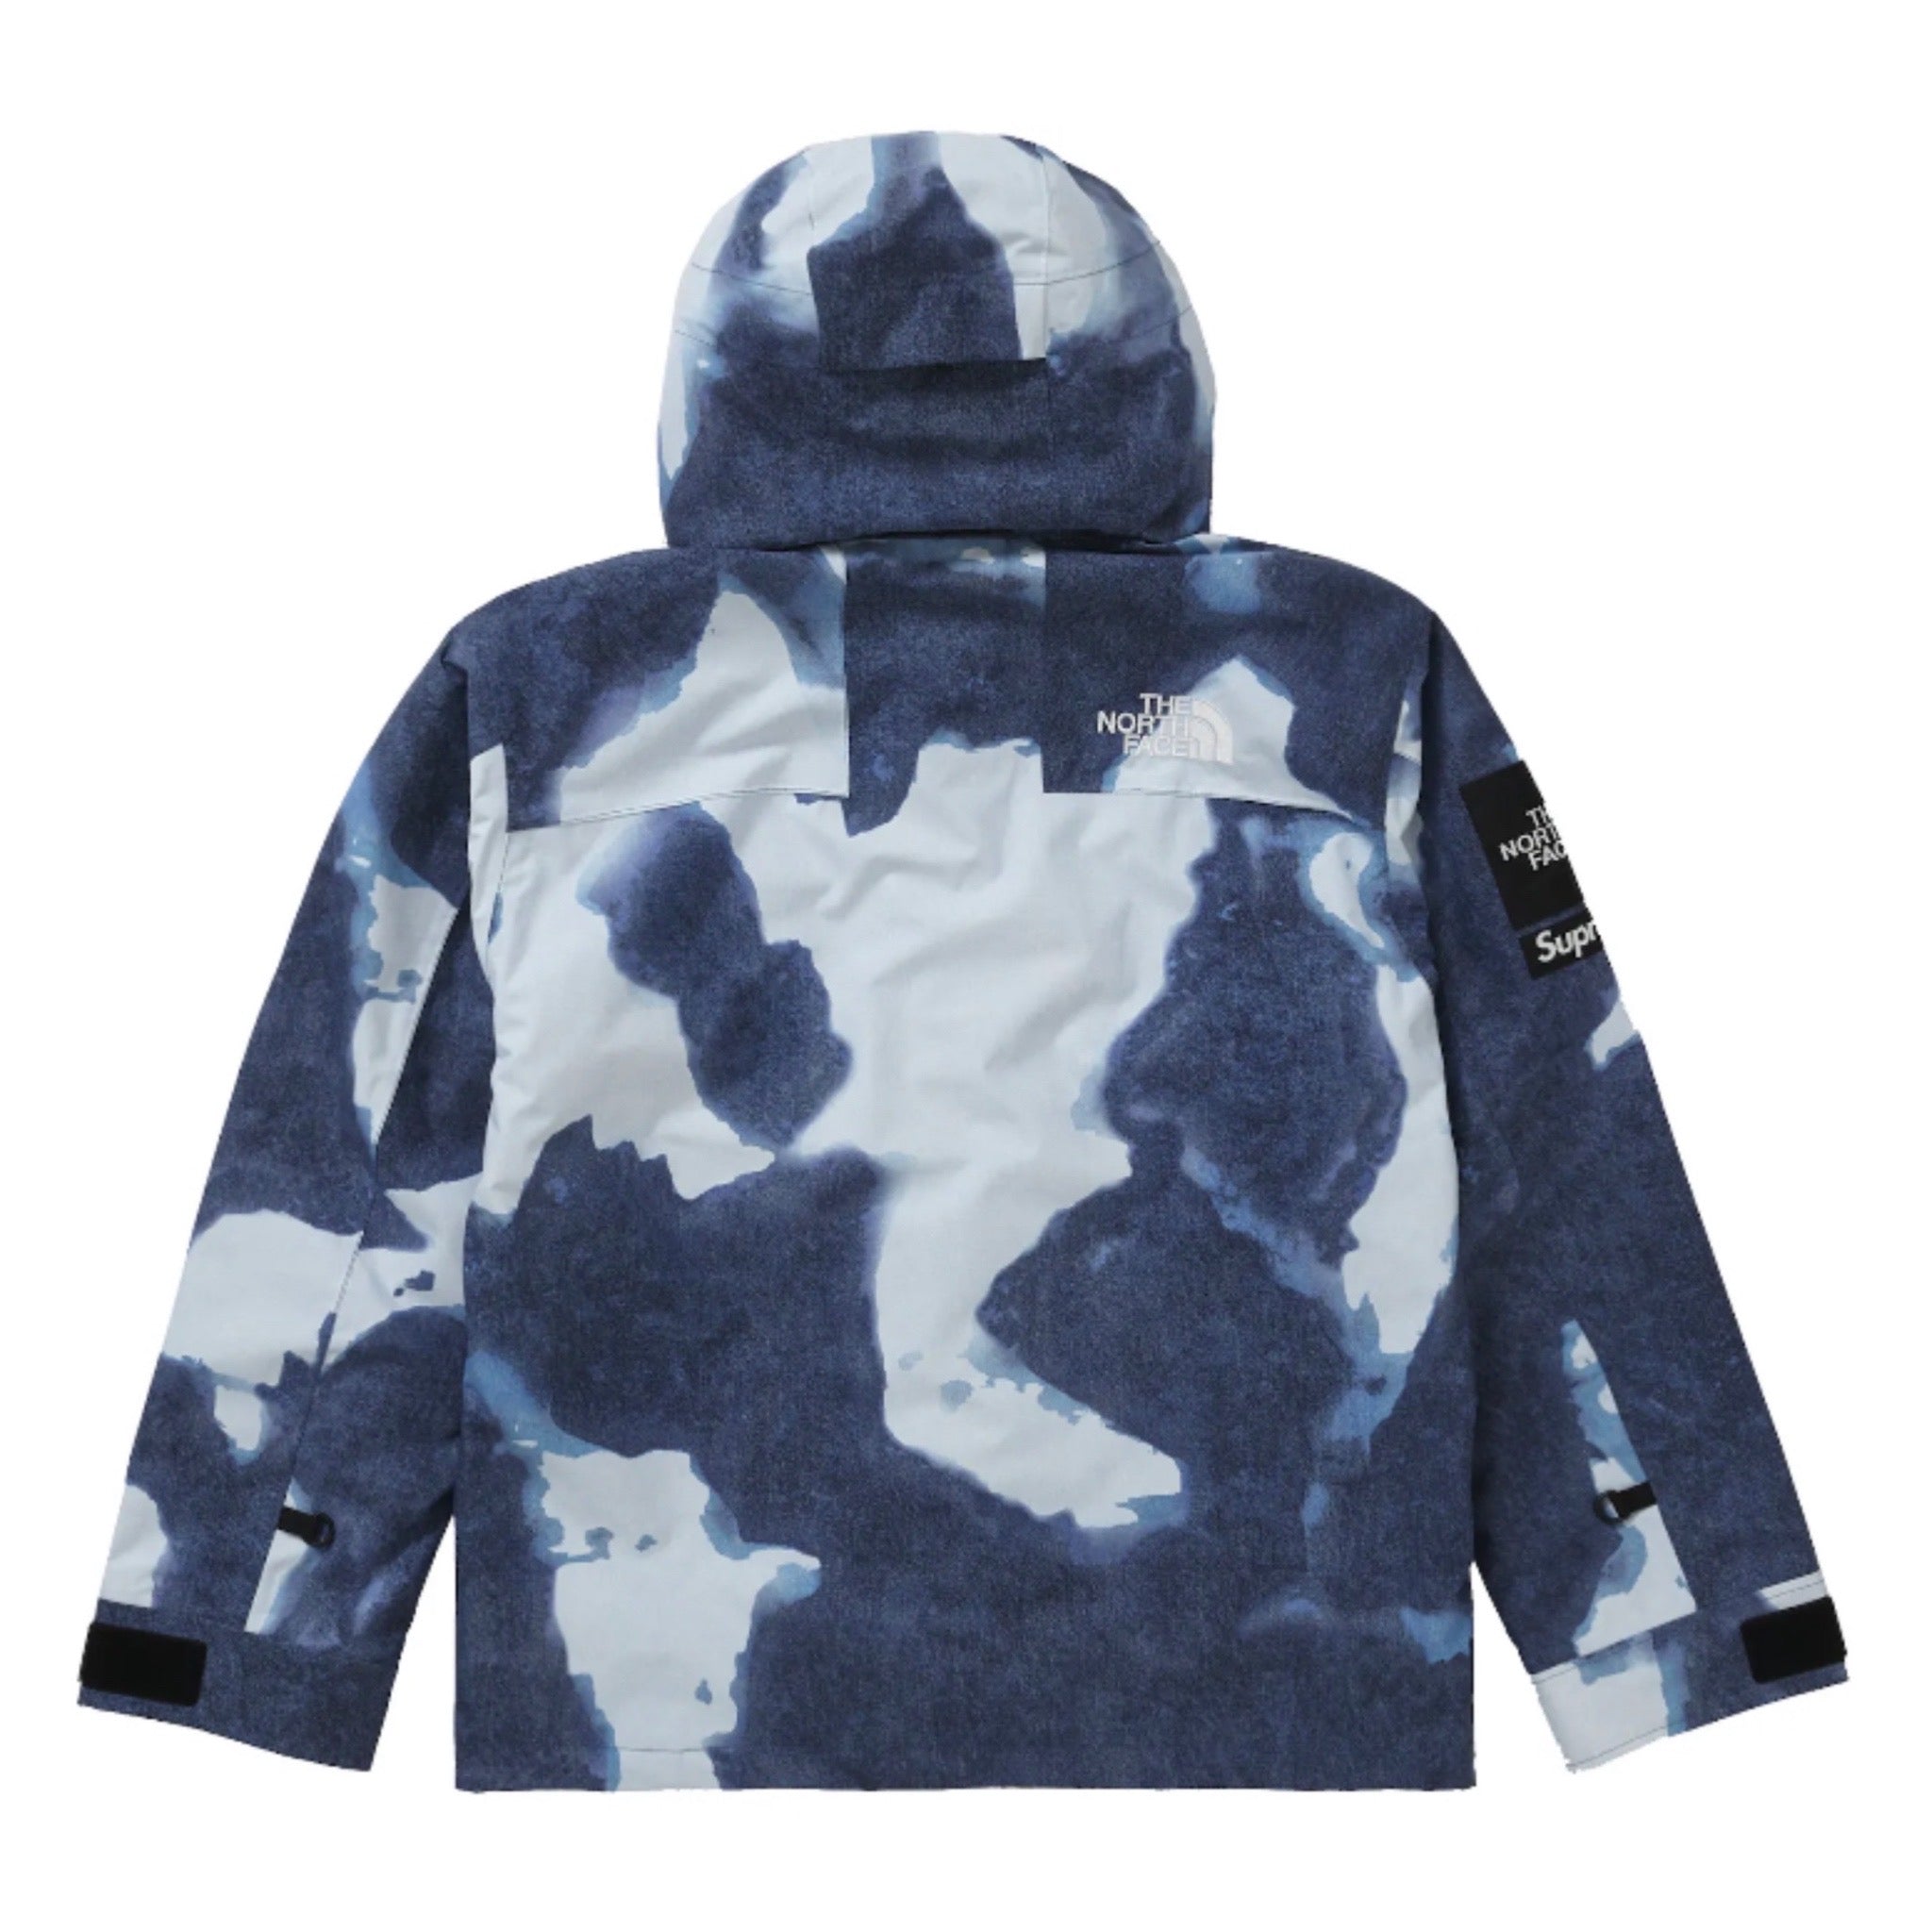 Supreme x The North Face Bleached Denim Print Mountain Jacket - Indigo Denim Jacket